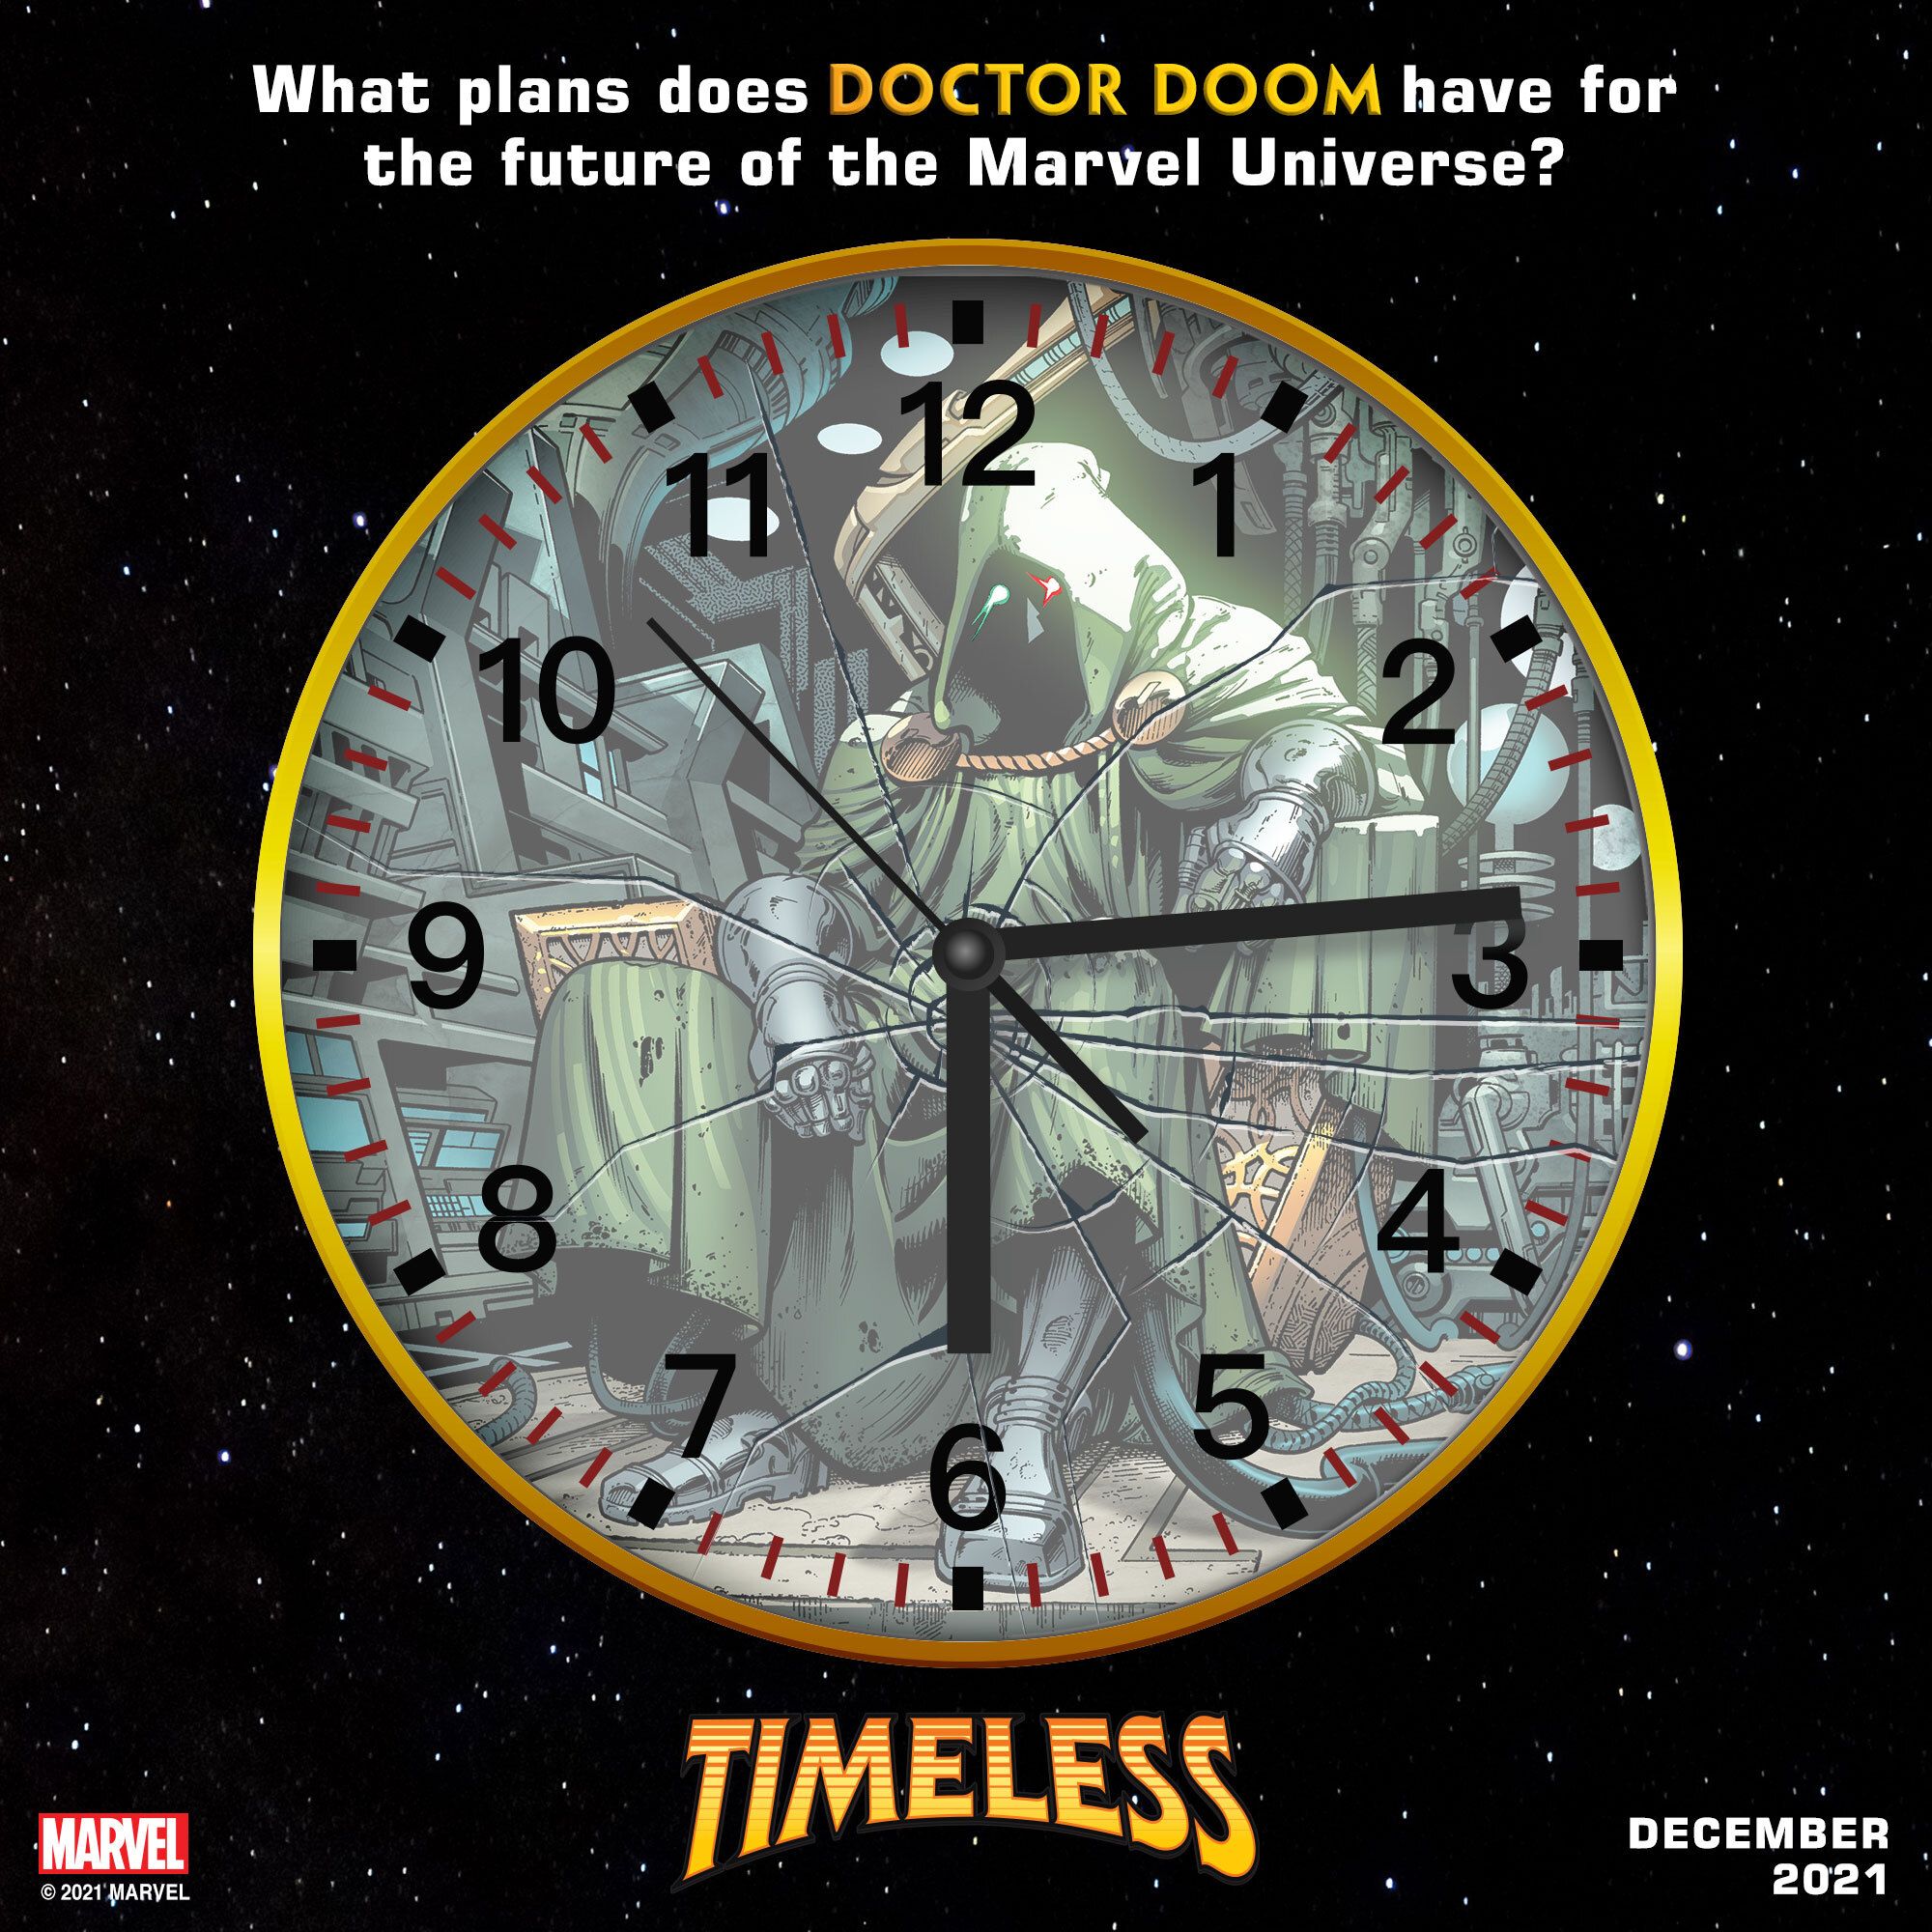 Doctor Doom in a teaser image for Marvel's Timeless